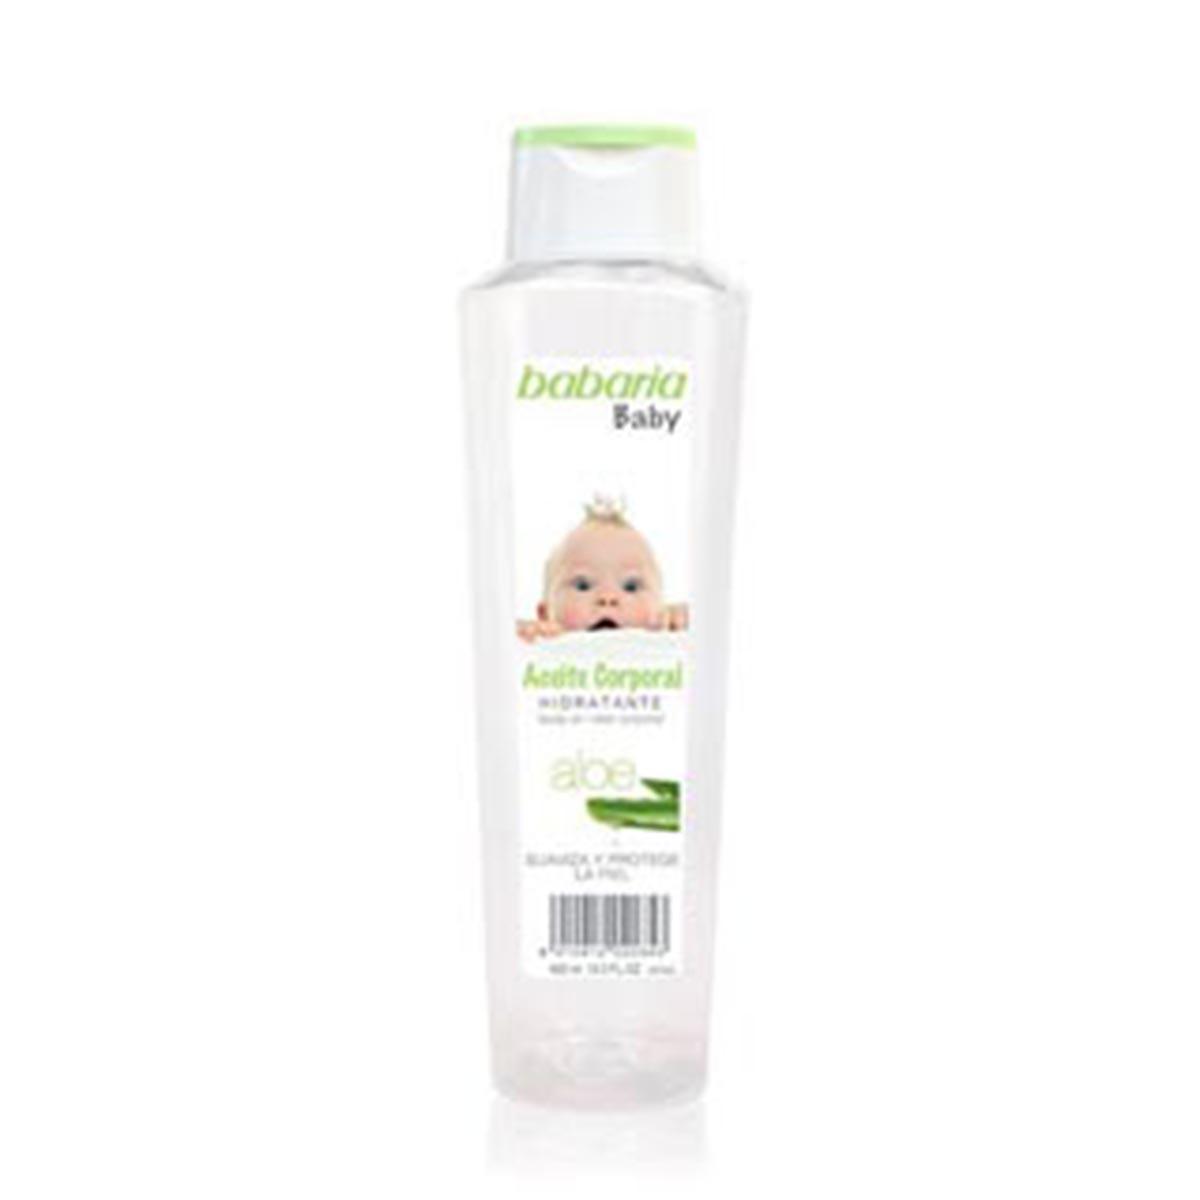 babaria-baby-body-oil-moisturizing-aloe-400ml